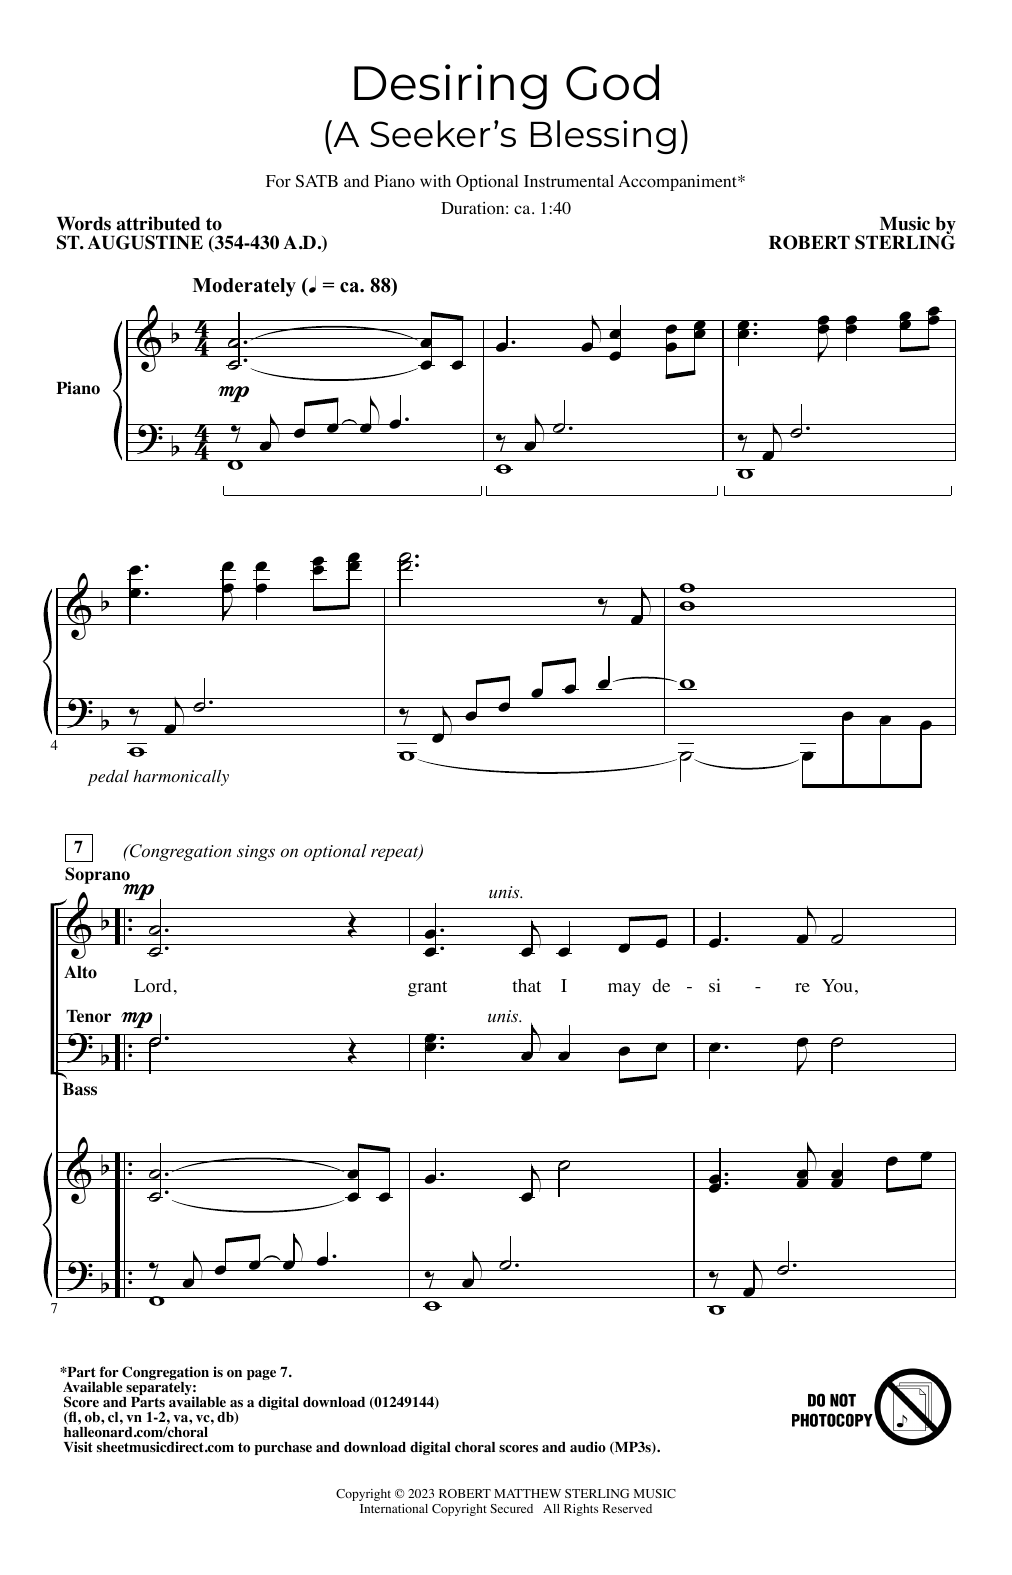 Robert Sterling Desiring God (A Seeker's Blessing) Sheet Music Notes & Chords for SATB Choir - Download or Print PDF